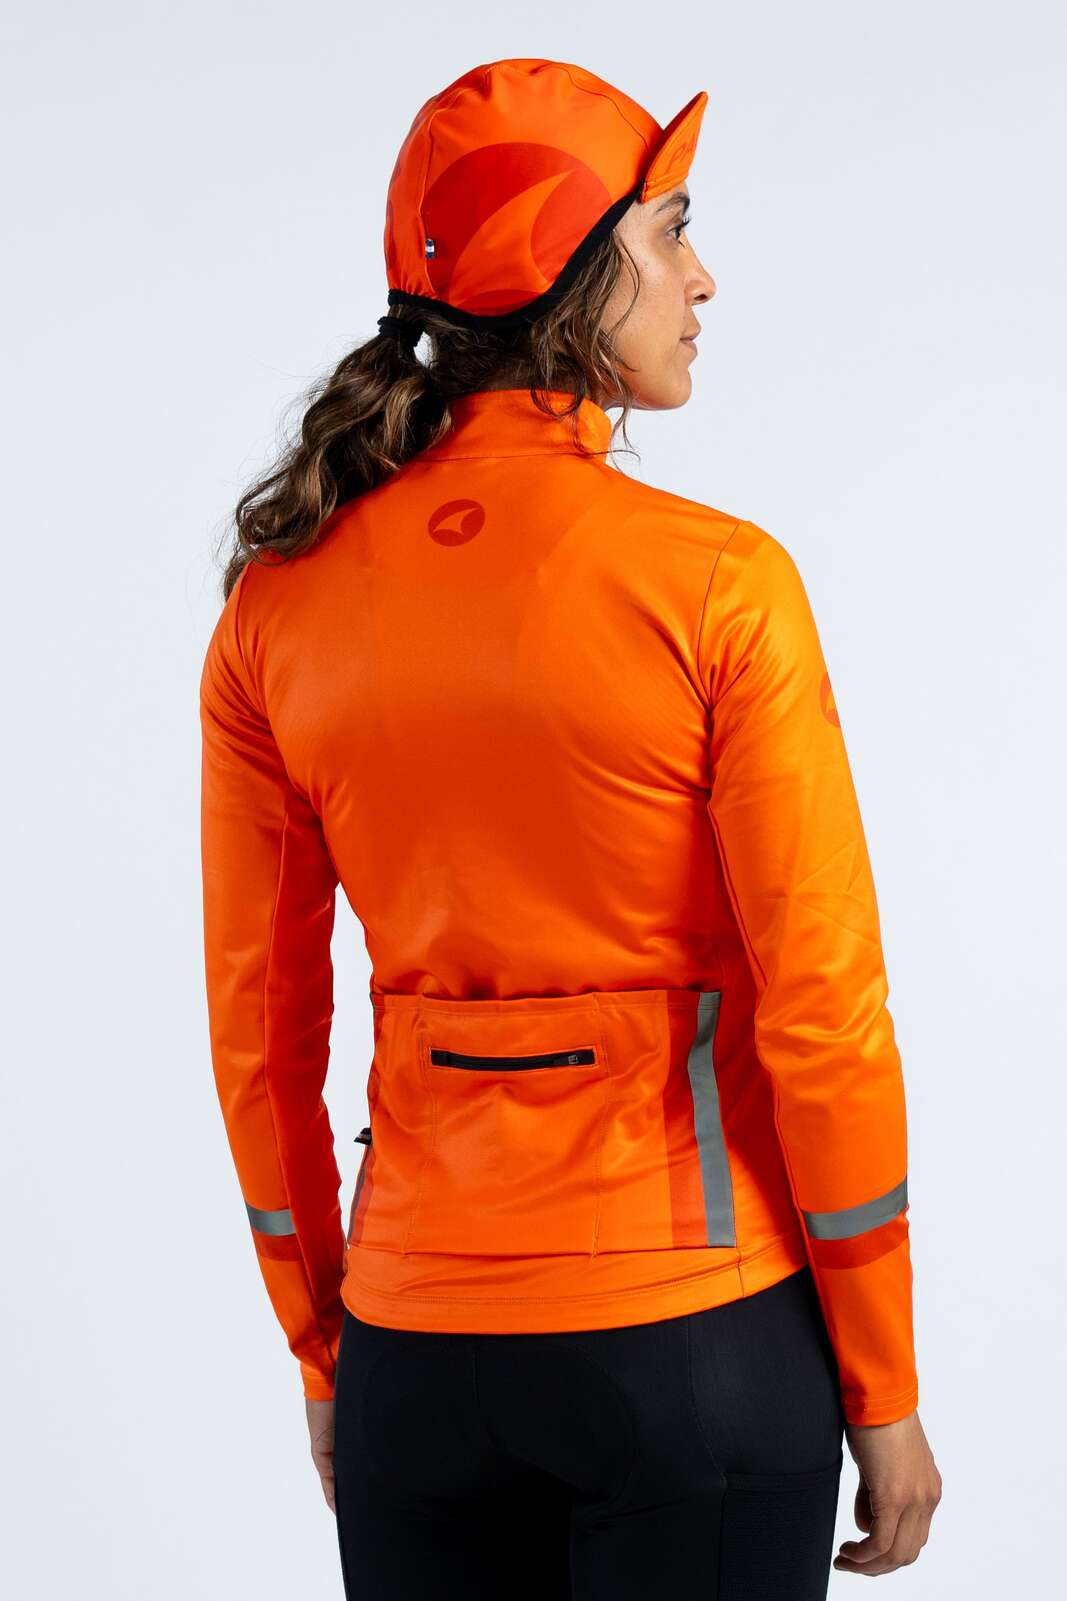 Women's Red/Orange Winter Cycling Cap - Back View